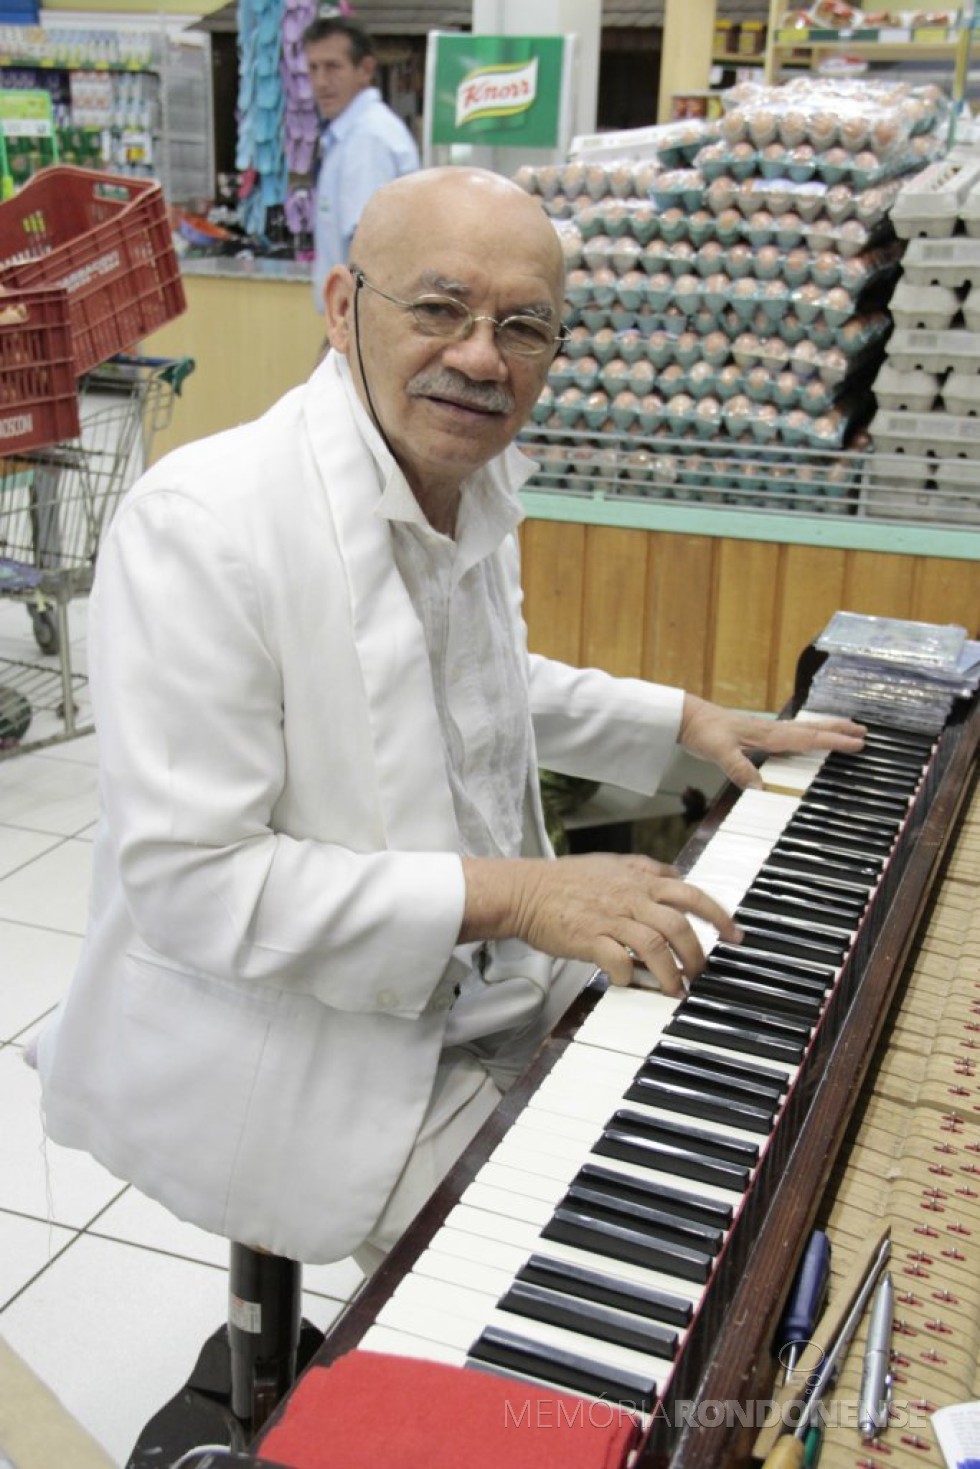 Pianista José Idomineu da Silva 